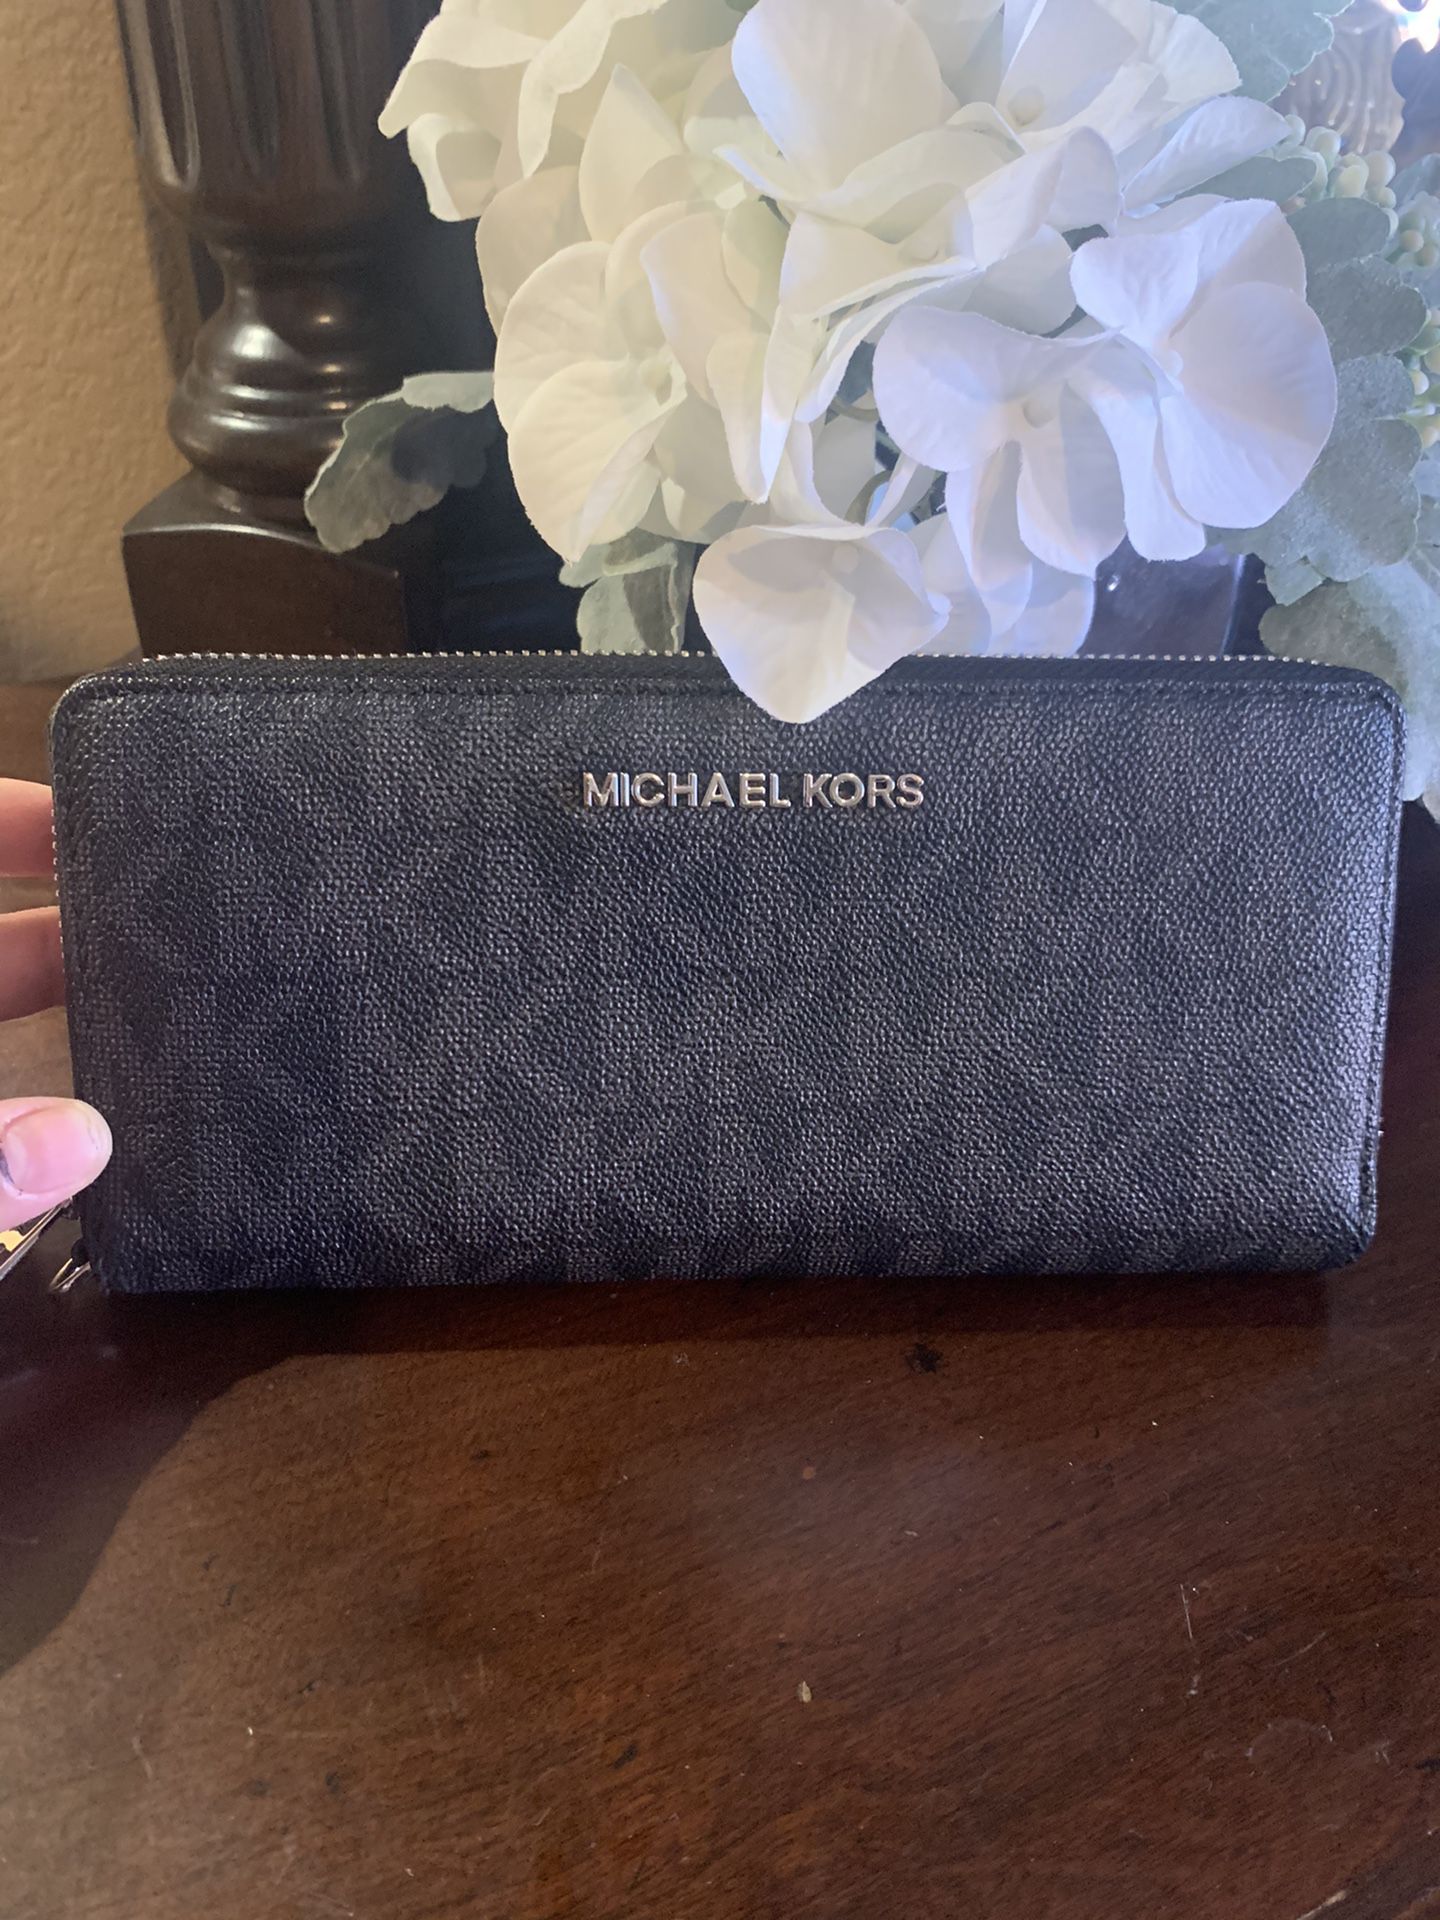 Michael kors large wallet